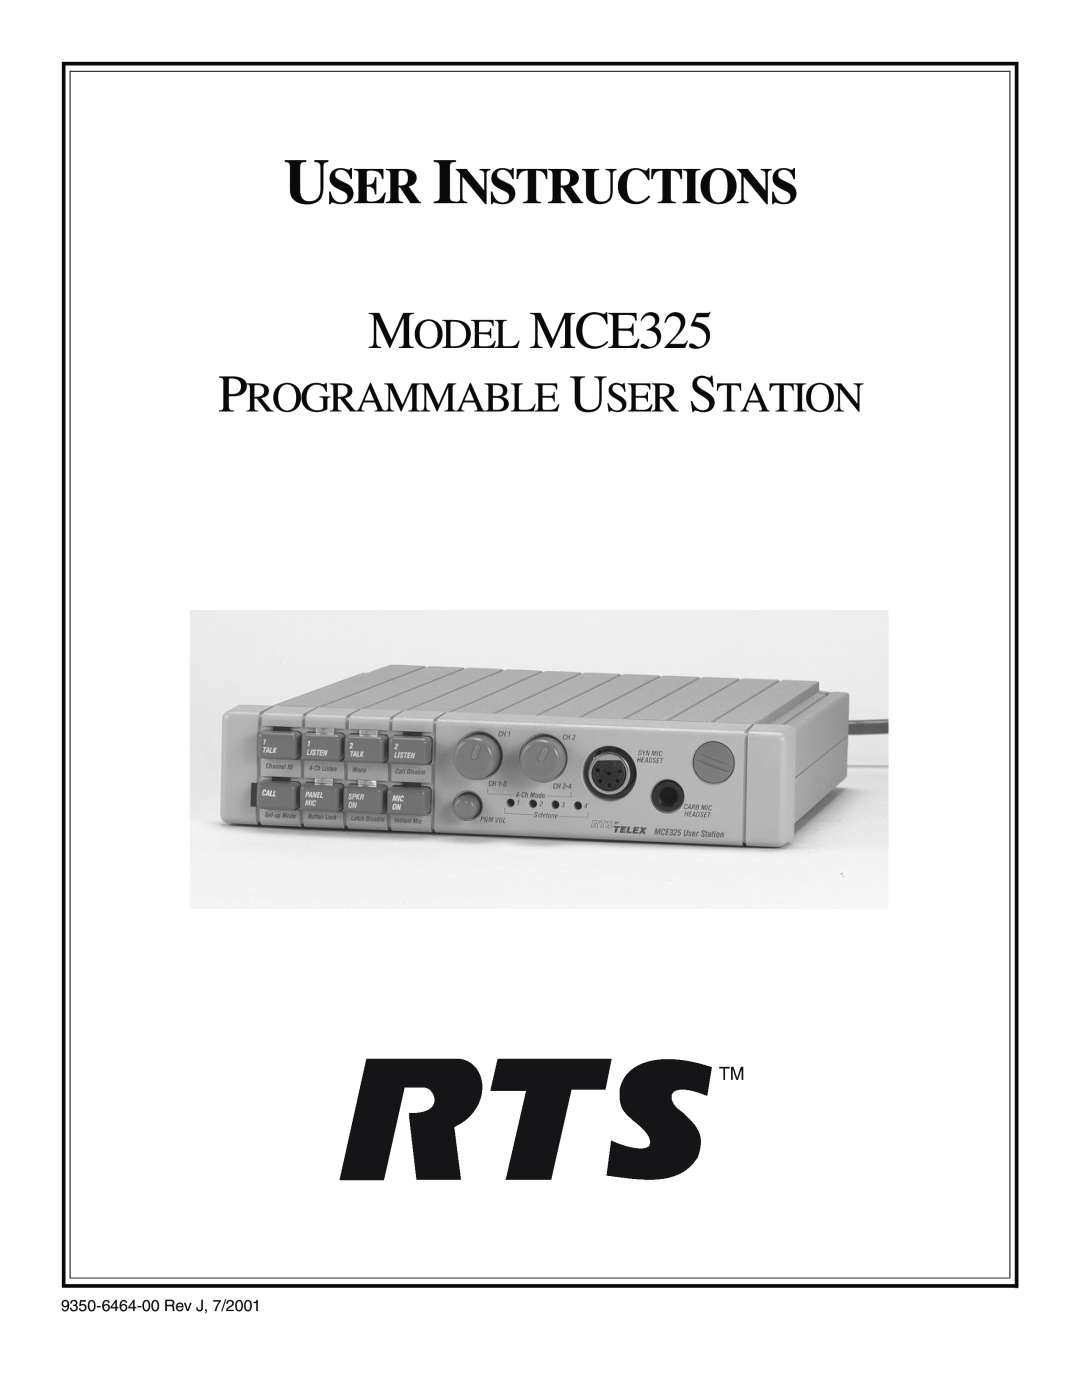 Telex manual MODEL MCE325, User Instructions, Programmable User Station 